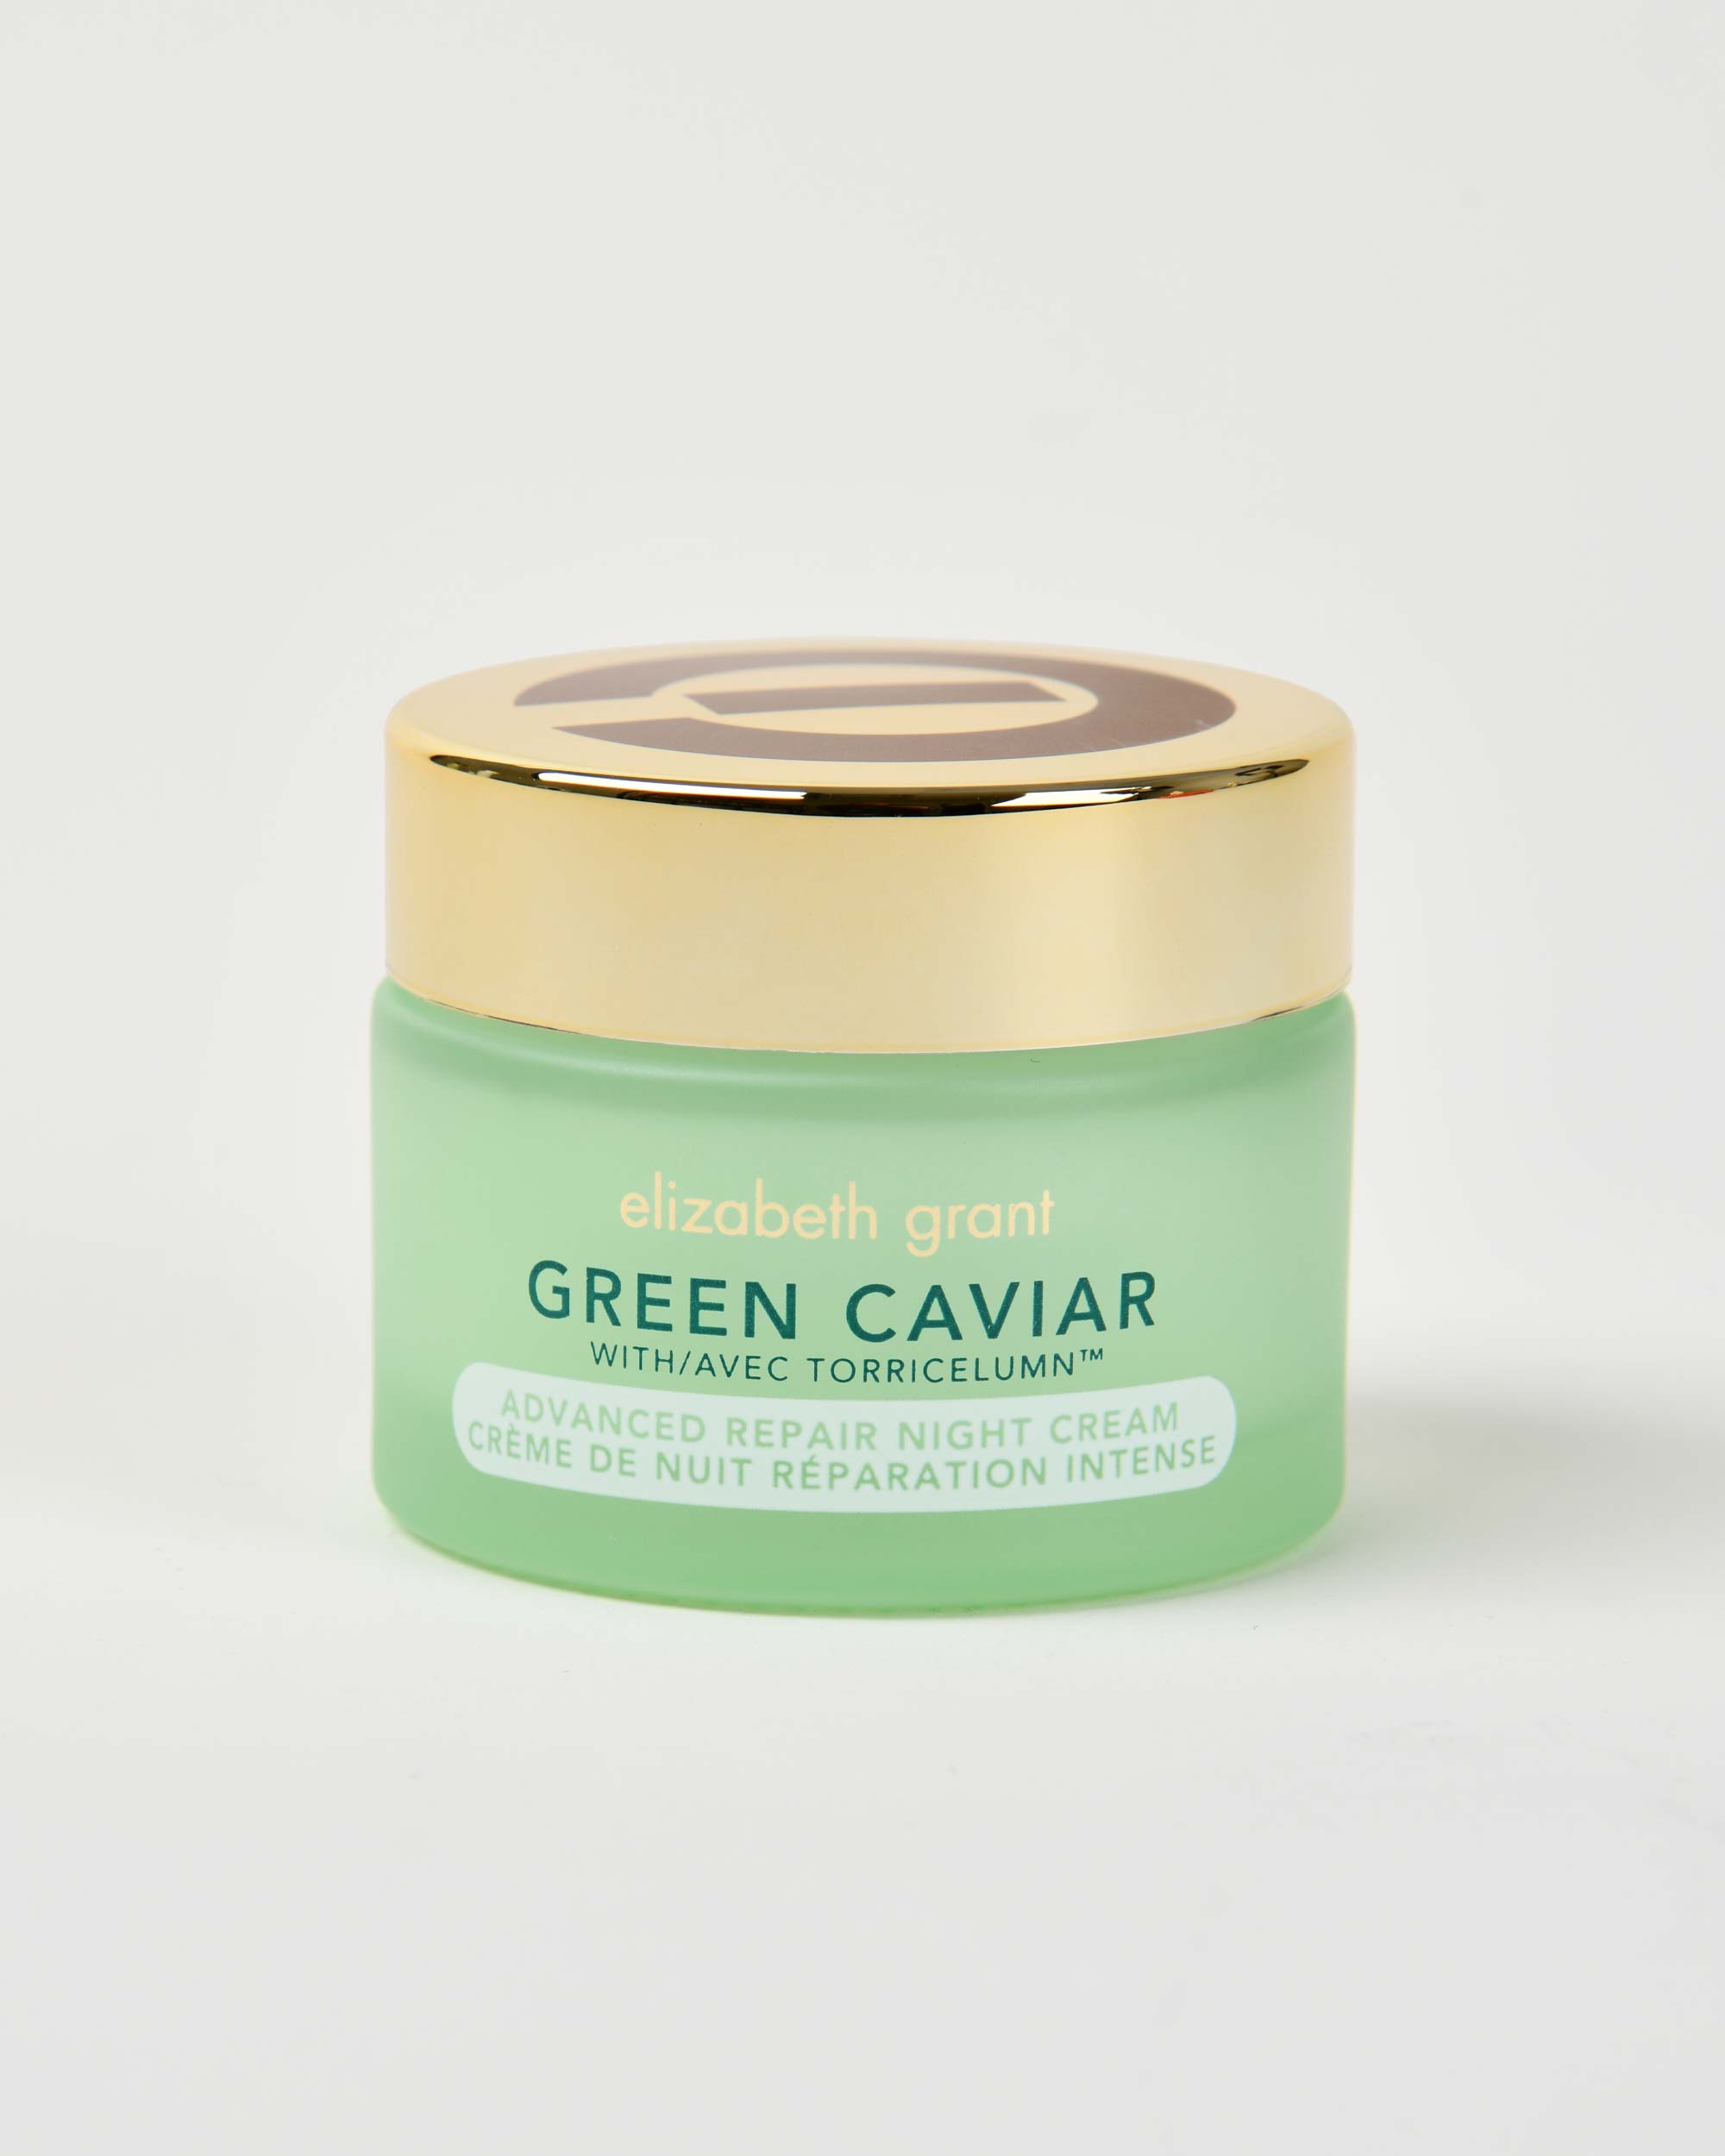 Green Caviar Duo